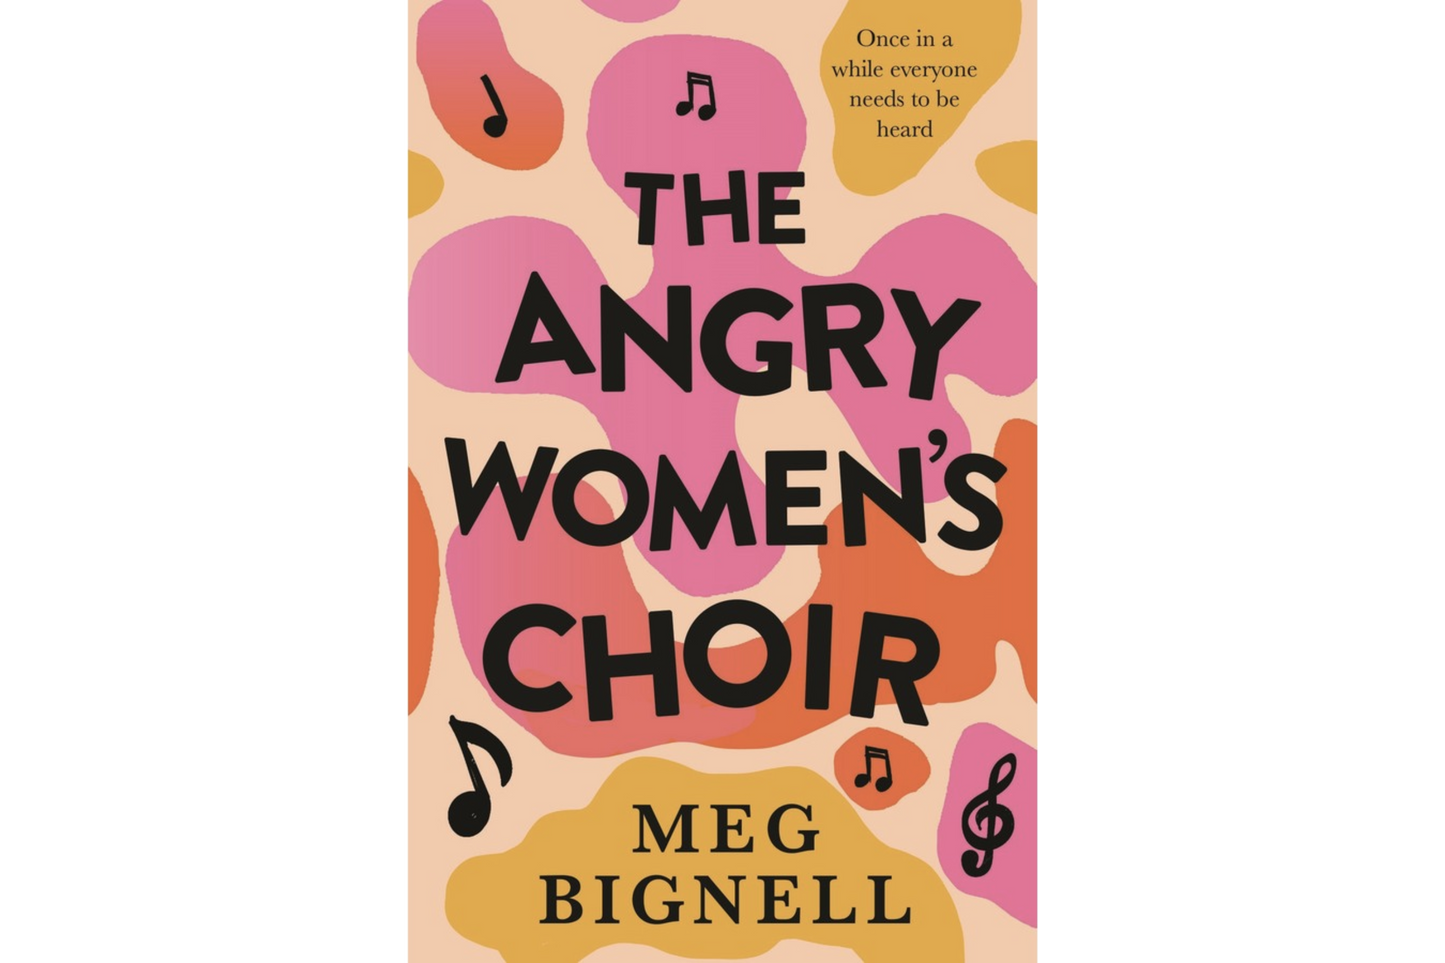 The Angry Women's Choir (Meg Bignell)